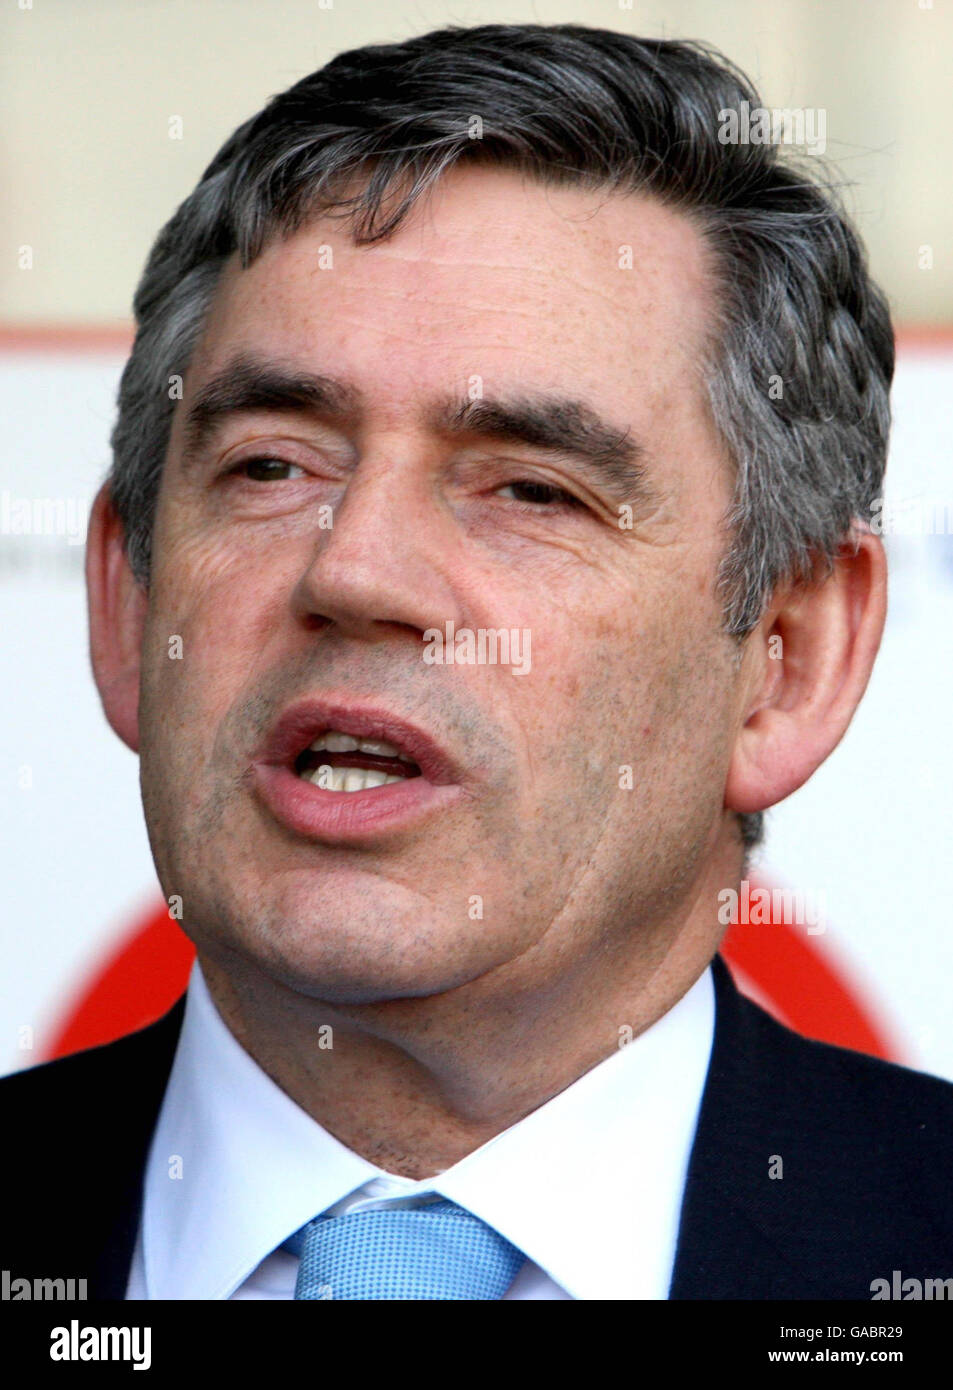 Britain's Prime Minister Gordon Brown during a visit to Basildon Hospital, Cardiothoracic centre, Basildon, Essex. Stock Photo